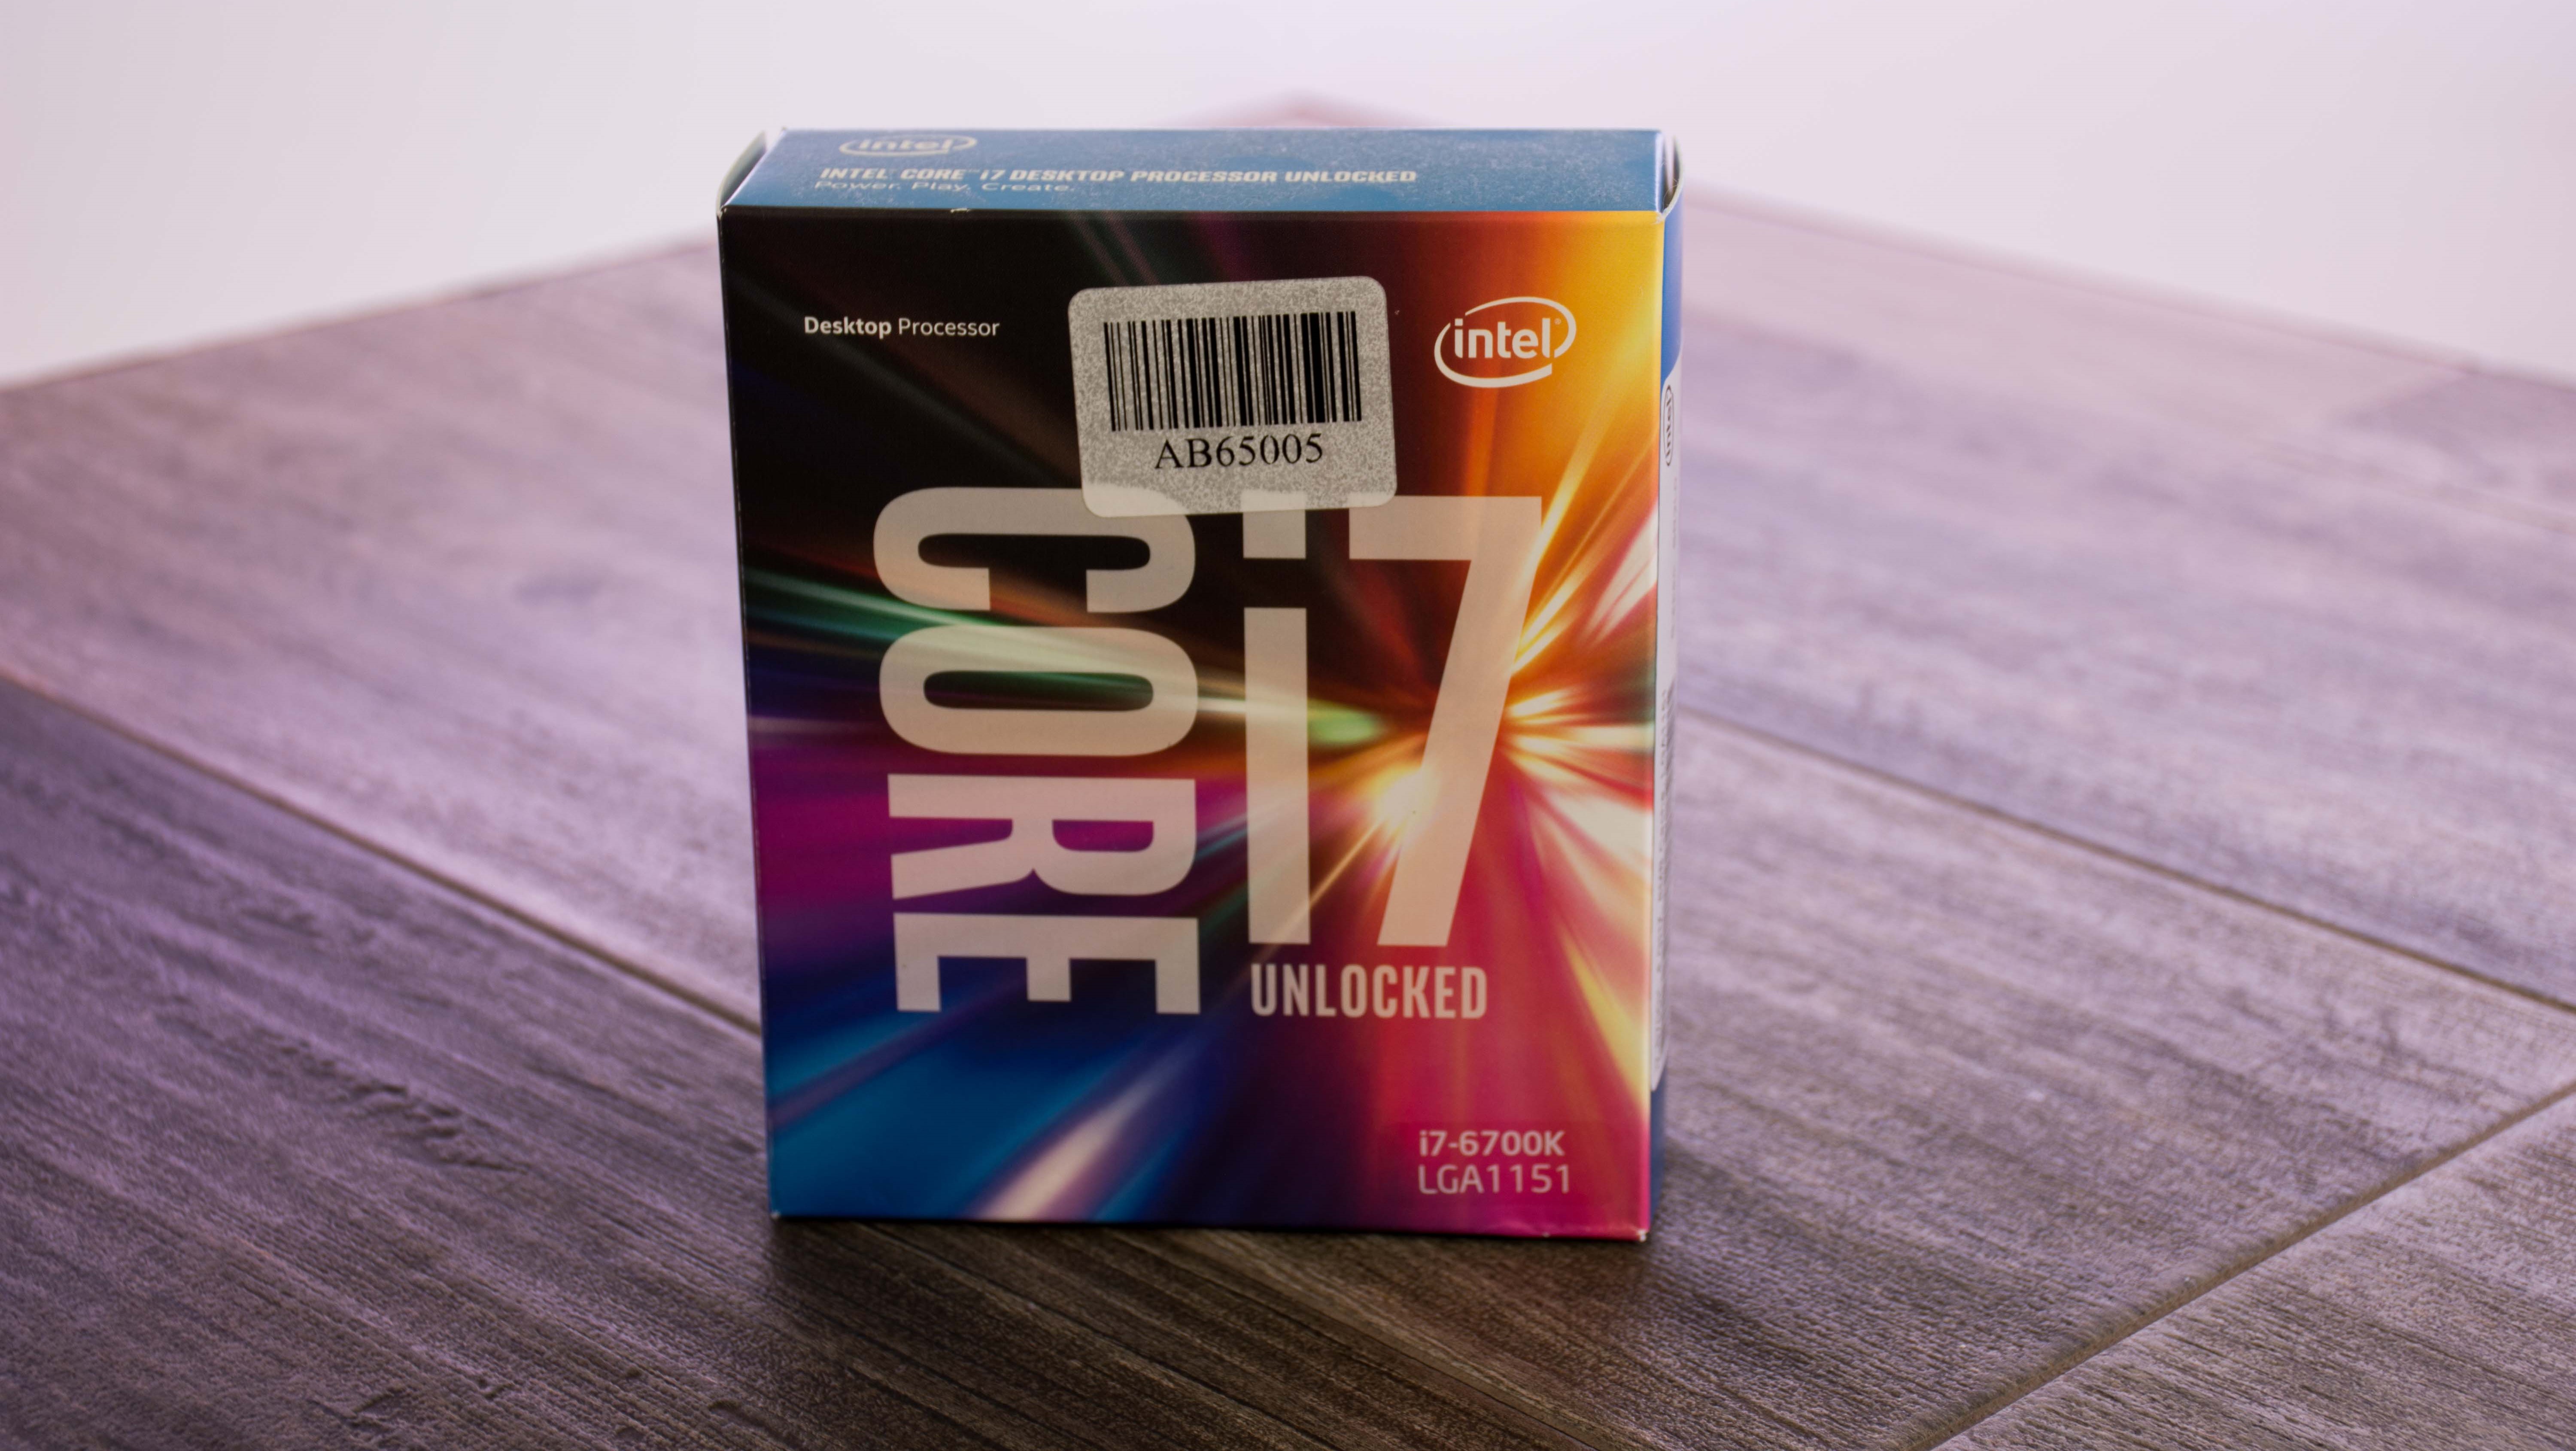 Intel Core I7 6700k